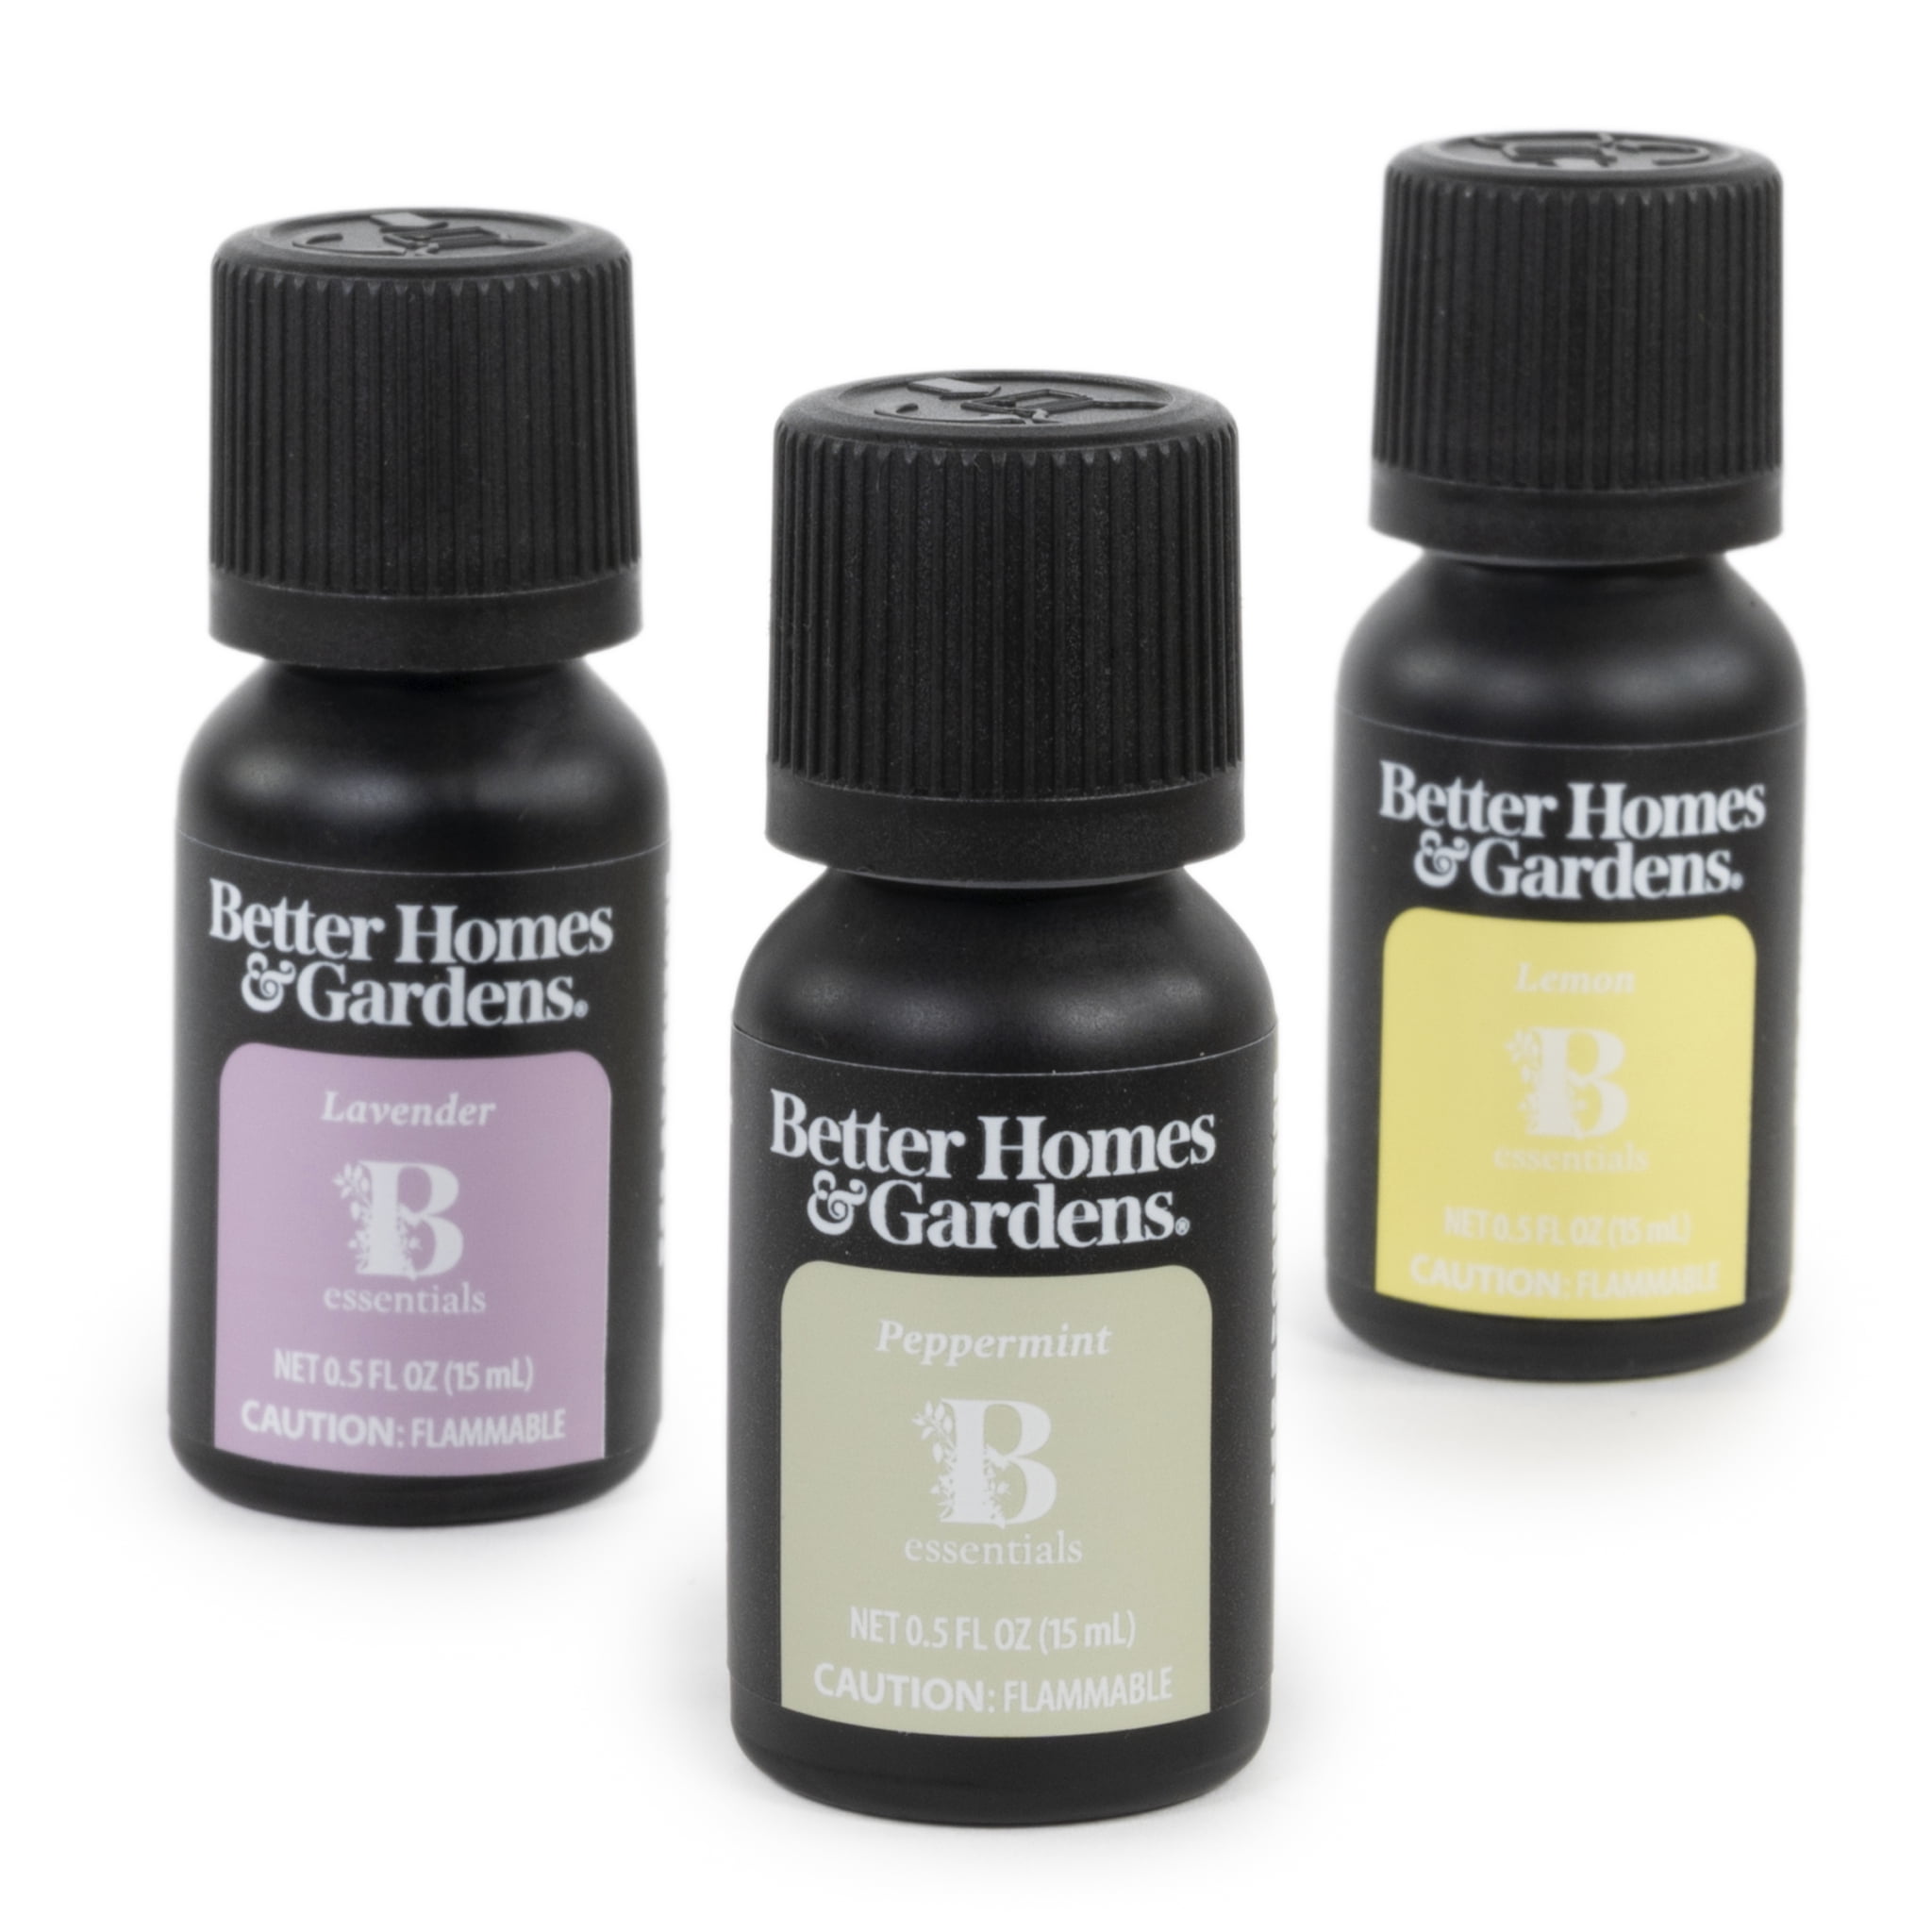 Better Homes & Gardens 100% Pure Essential Oils: Lavender, Peppermint, & Lemon, 3 x 15mL